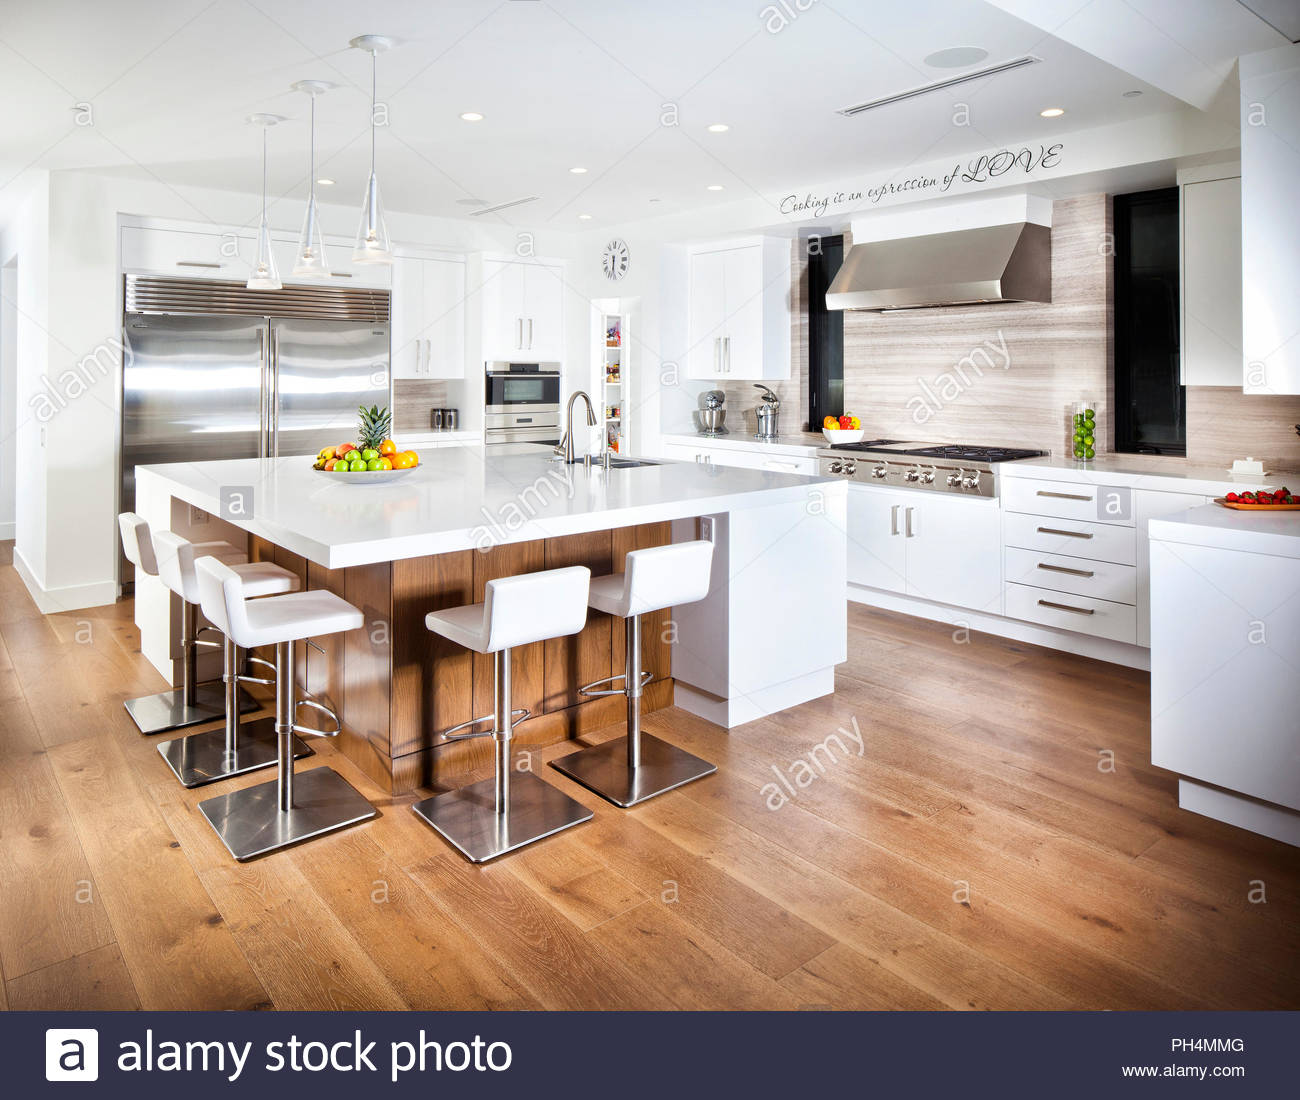 Cocina blanca con piso de madera Fotografía de stock - Alamy